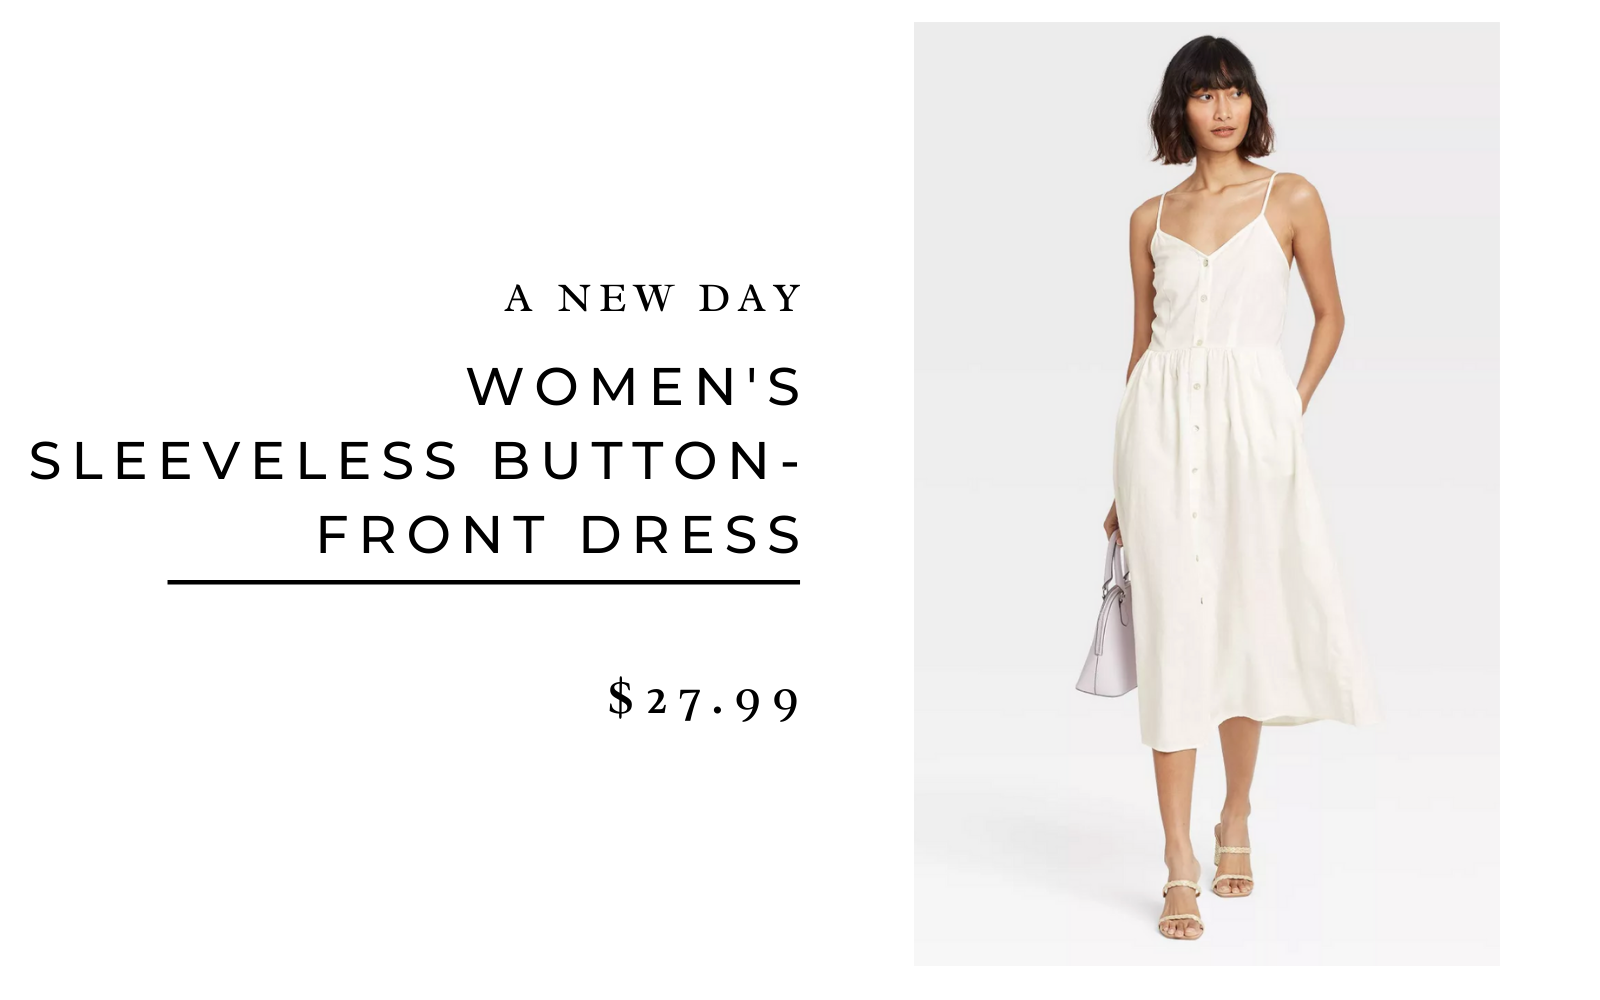 A New Day Women's Sleeveless Button-Front Dress